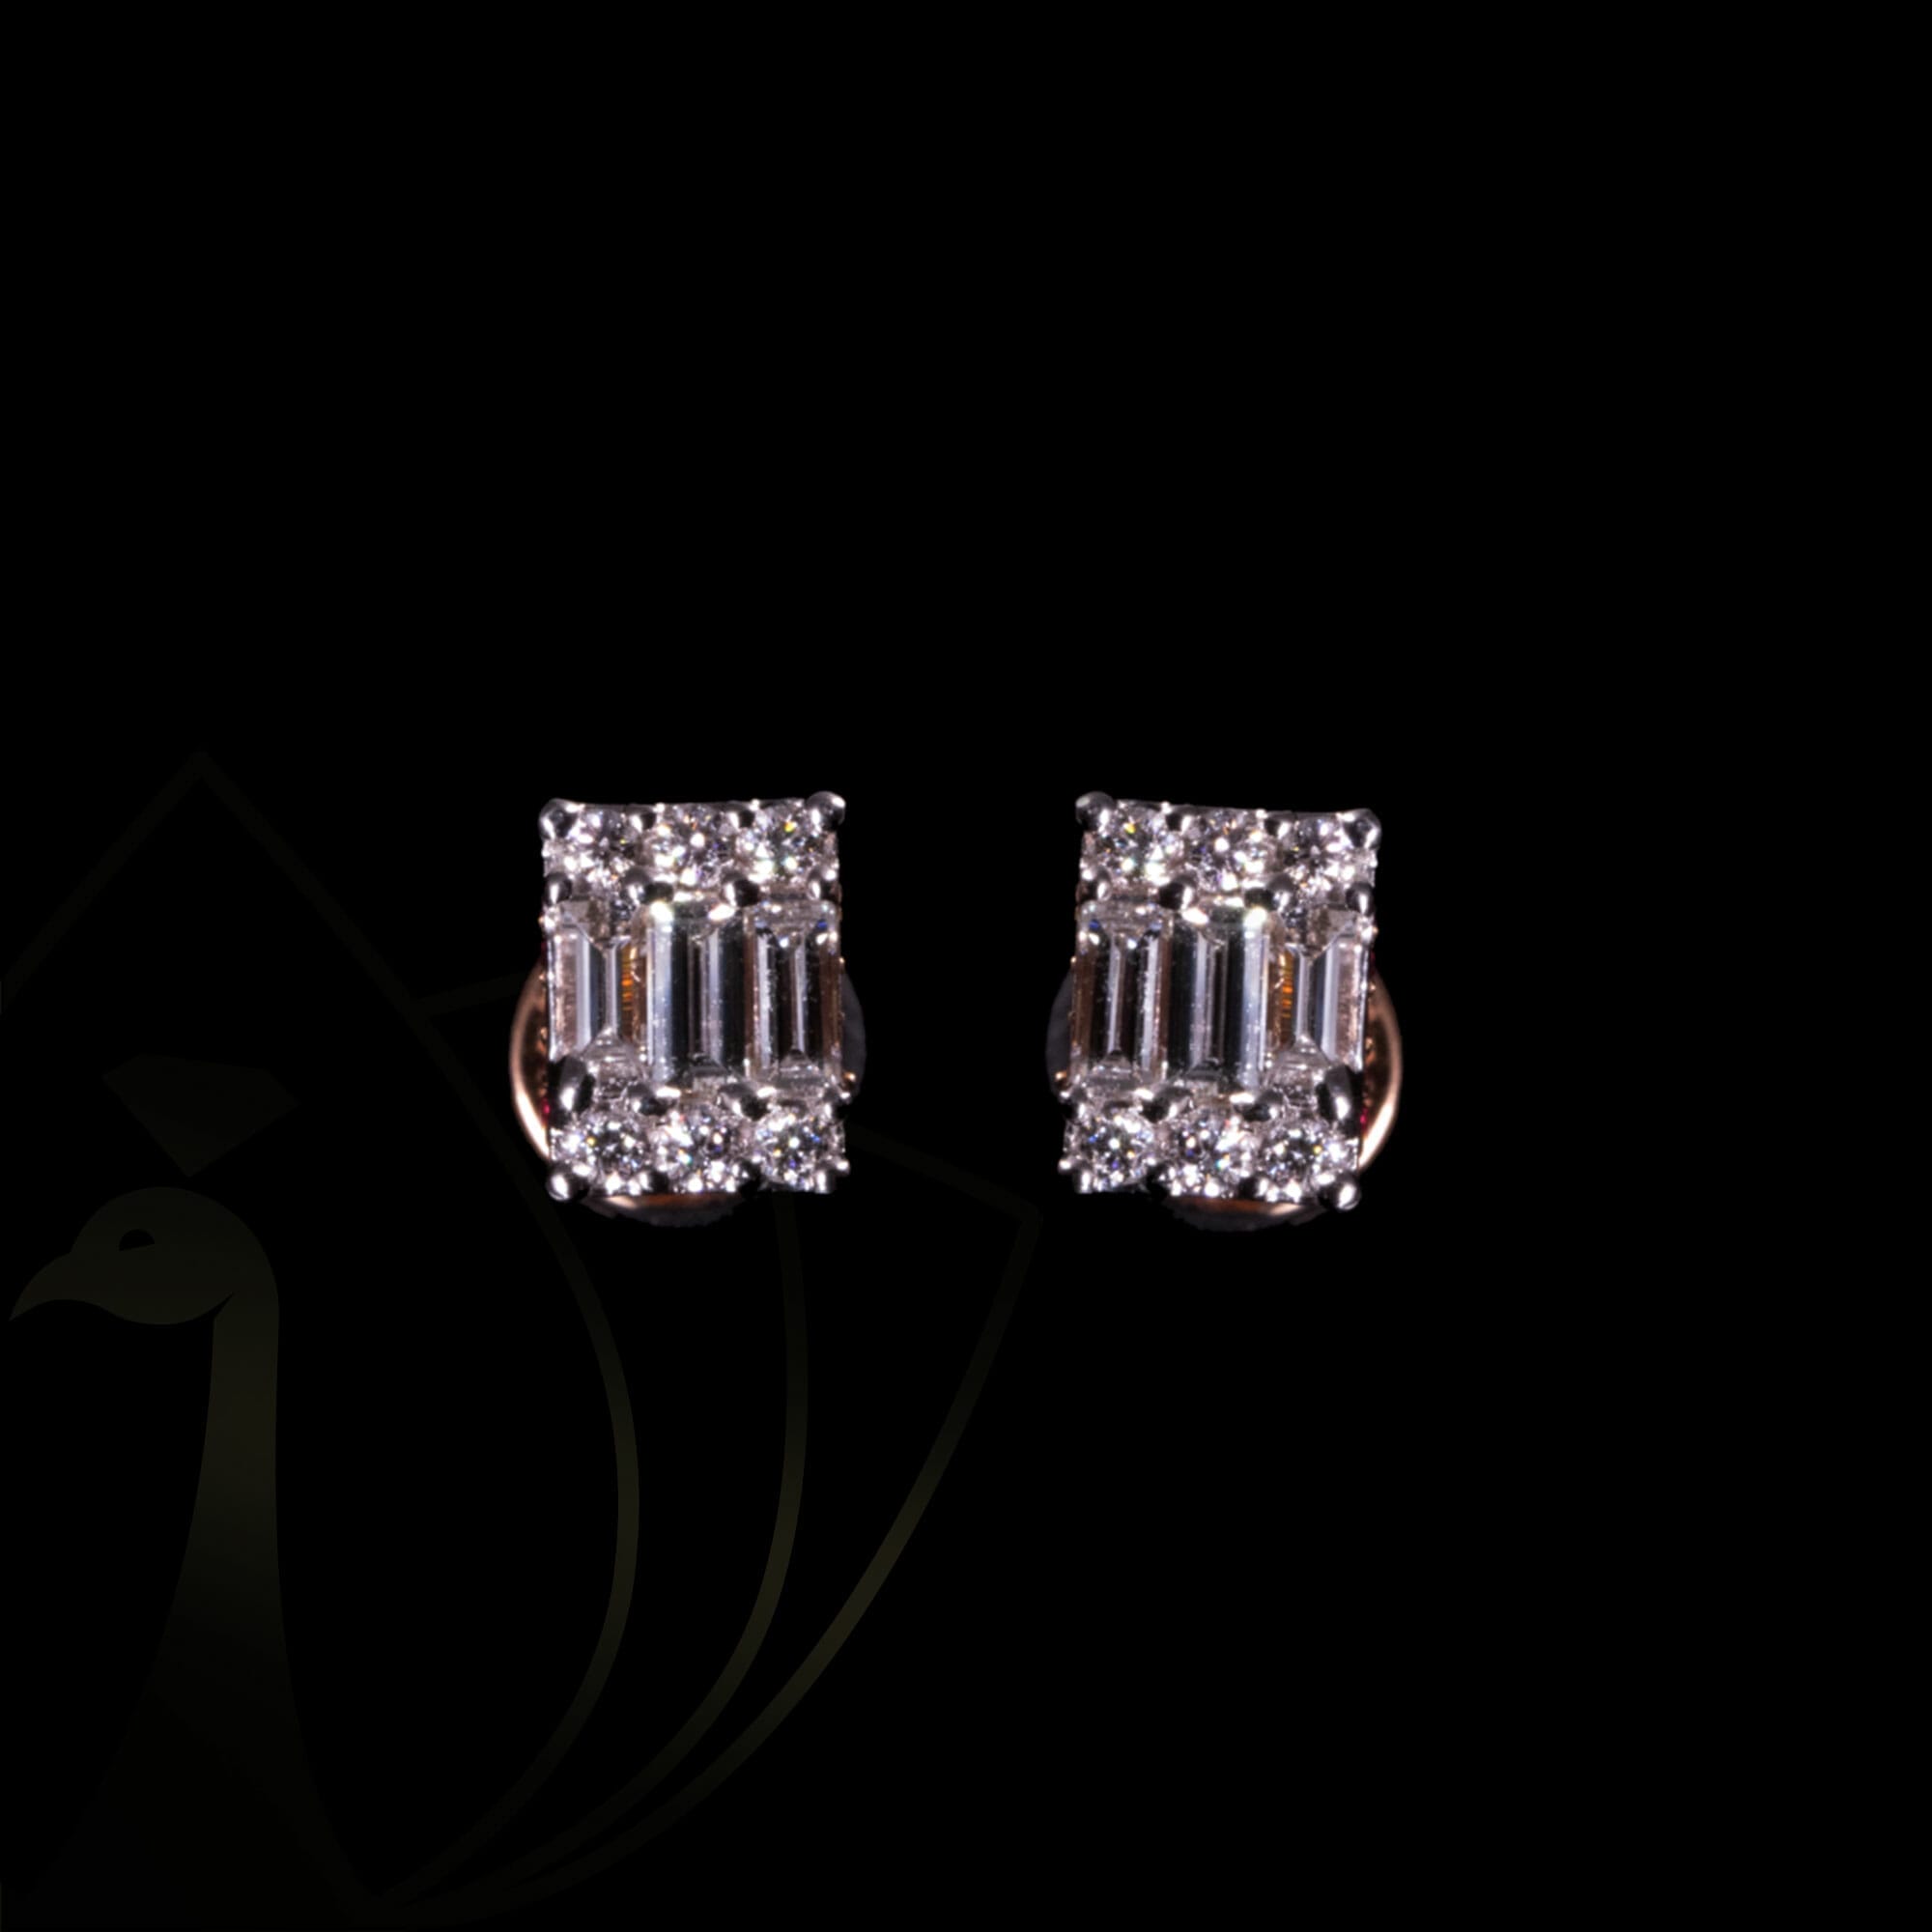 A pair of imperial empress emerald cut diamond earrings.